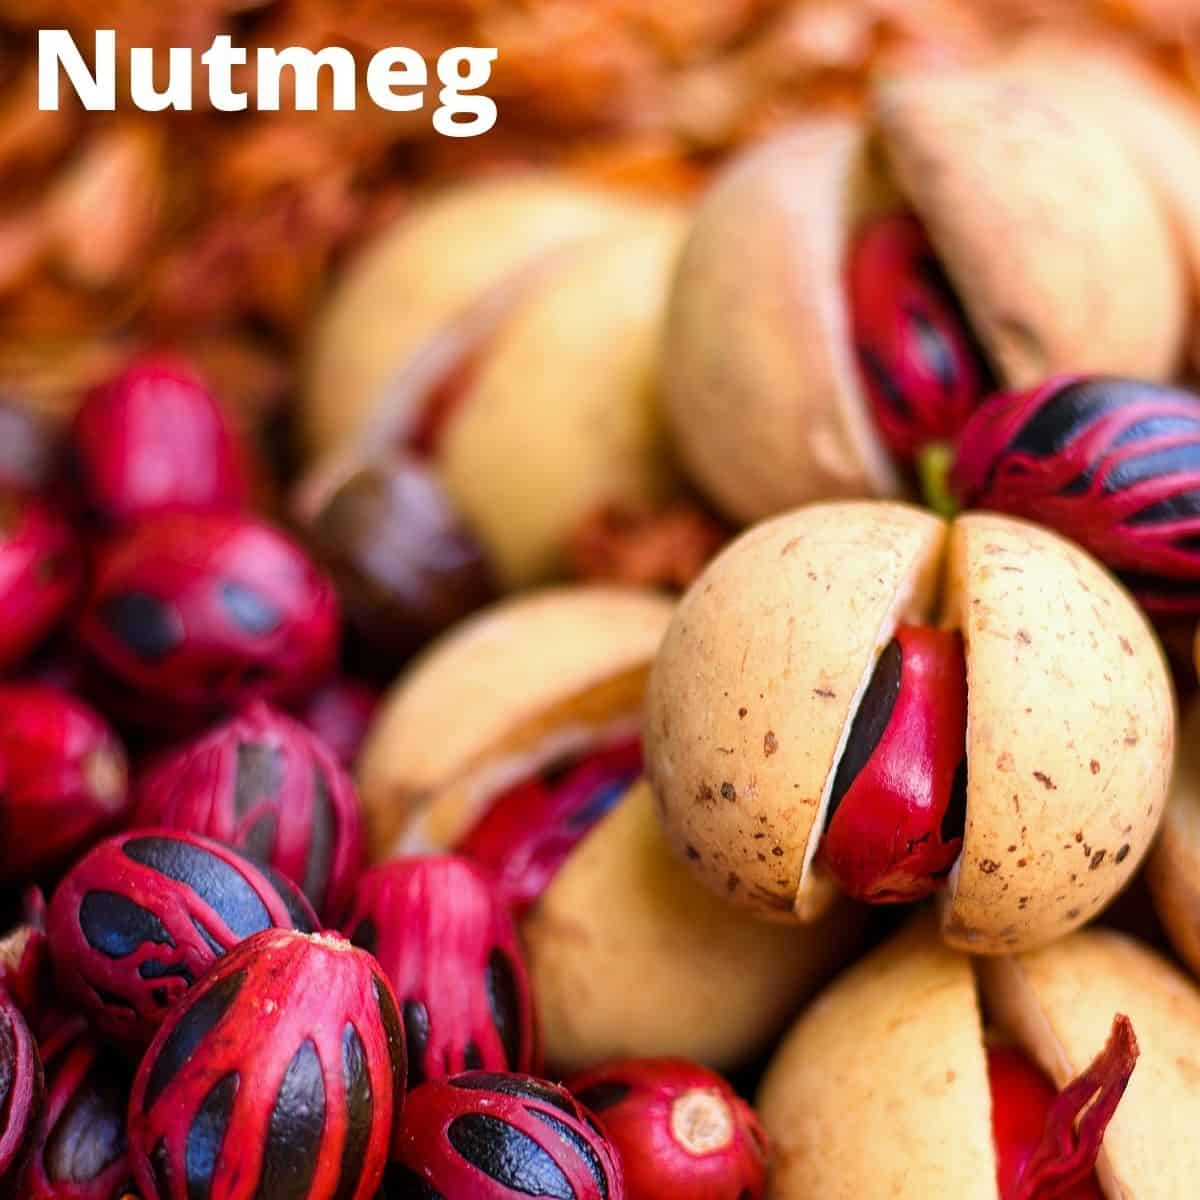 Nutmeg seeds and nutmeg fruit. 